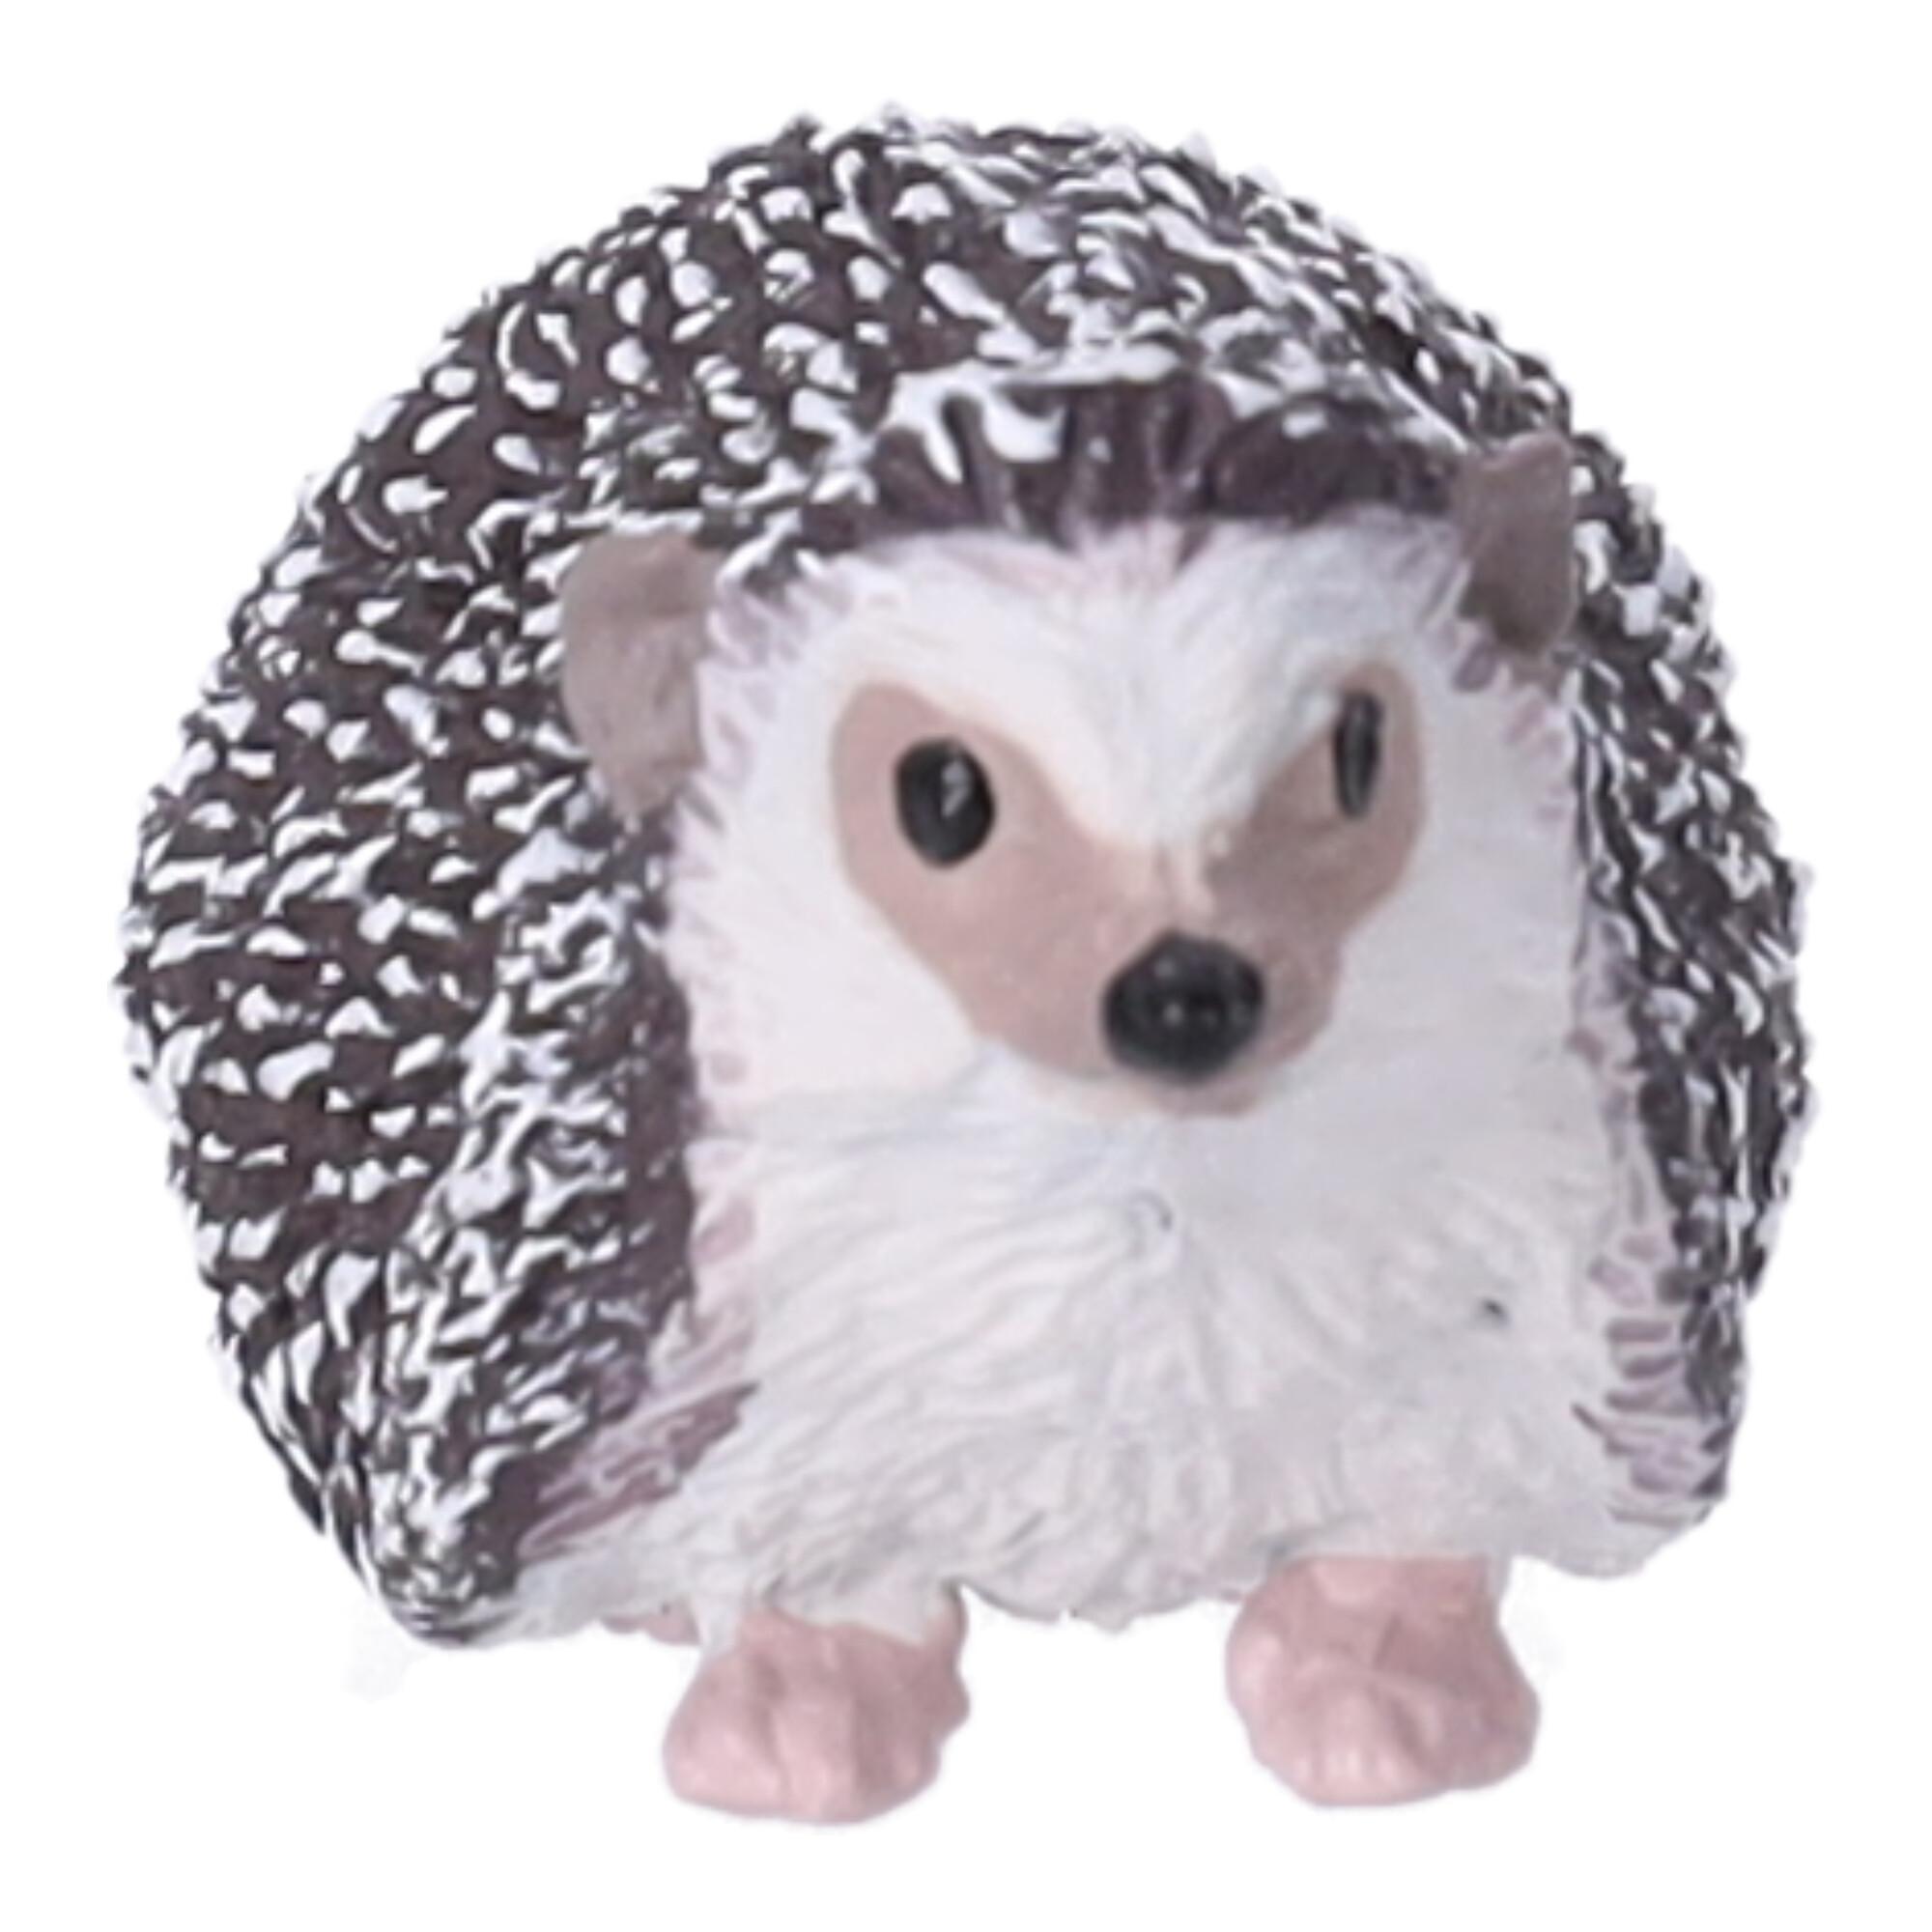 Collectible figurine Hedgehog, Papo